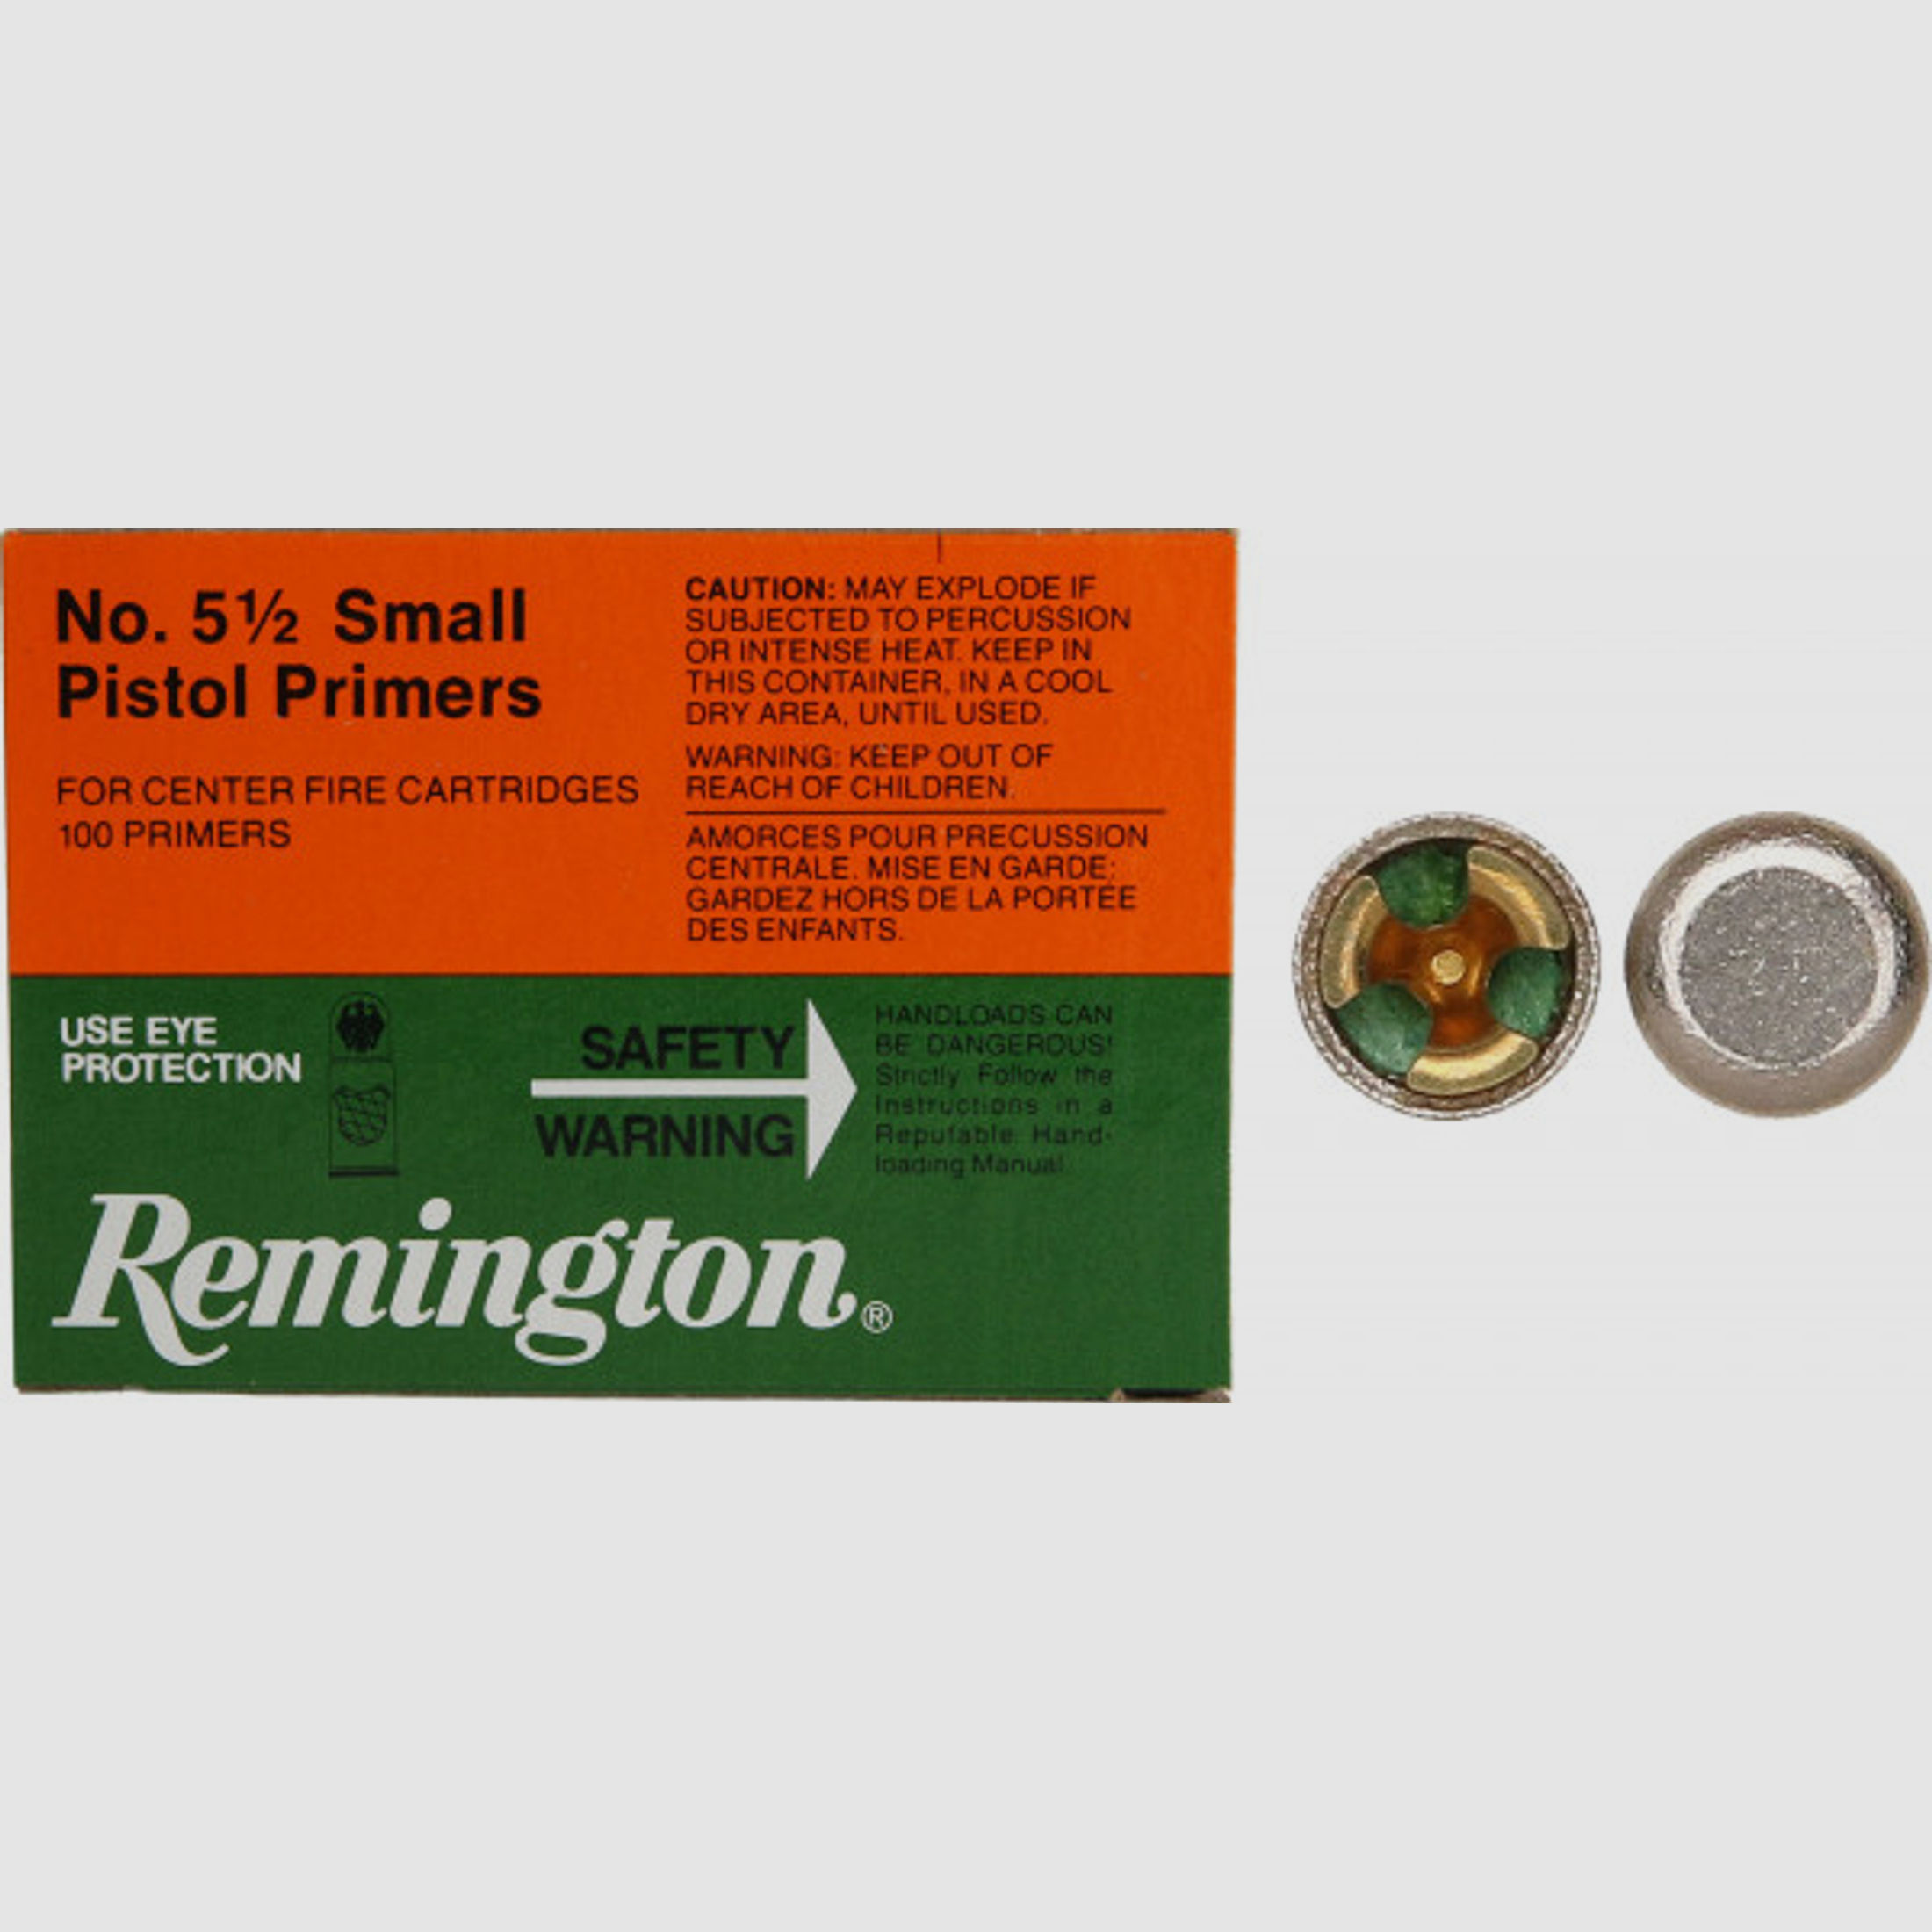 Remington Zündhütchen 5 1/2 Small Pistol 1000 Stück